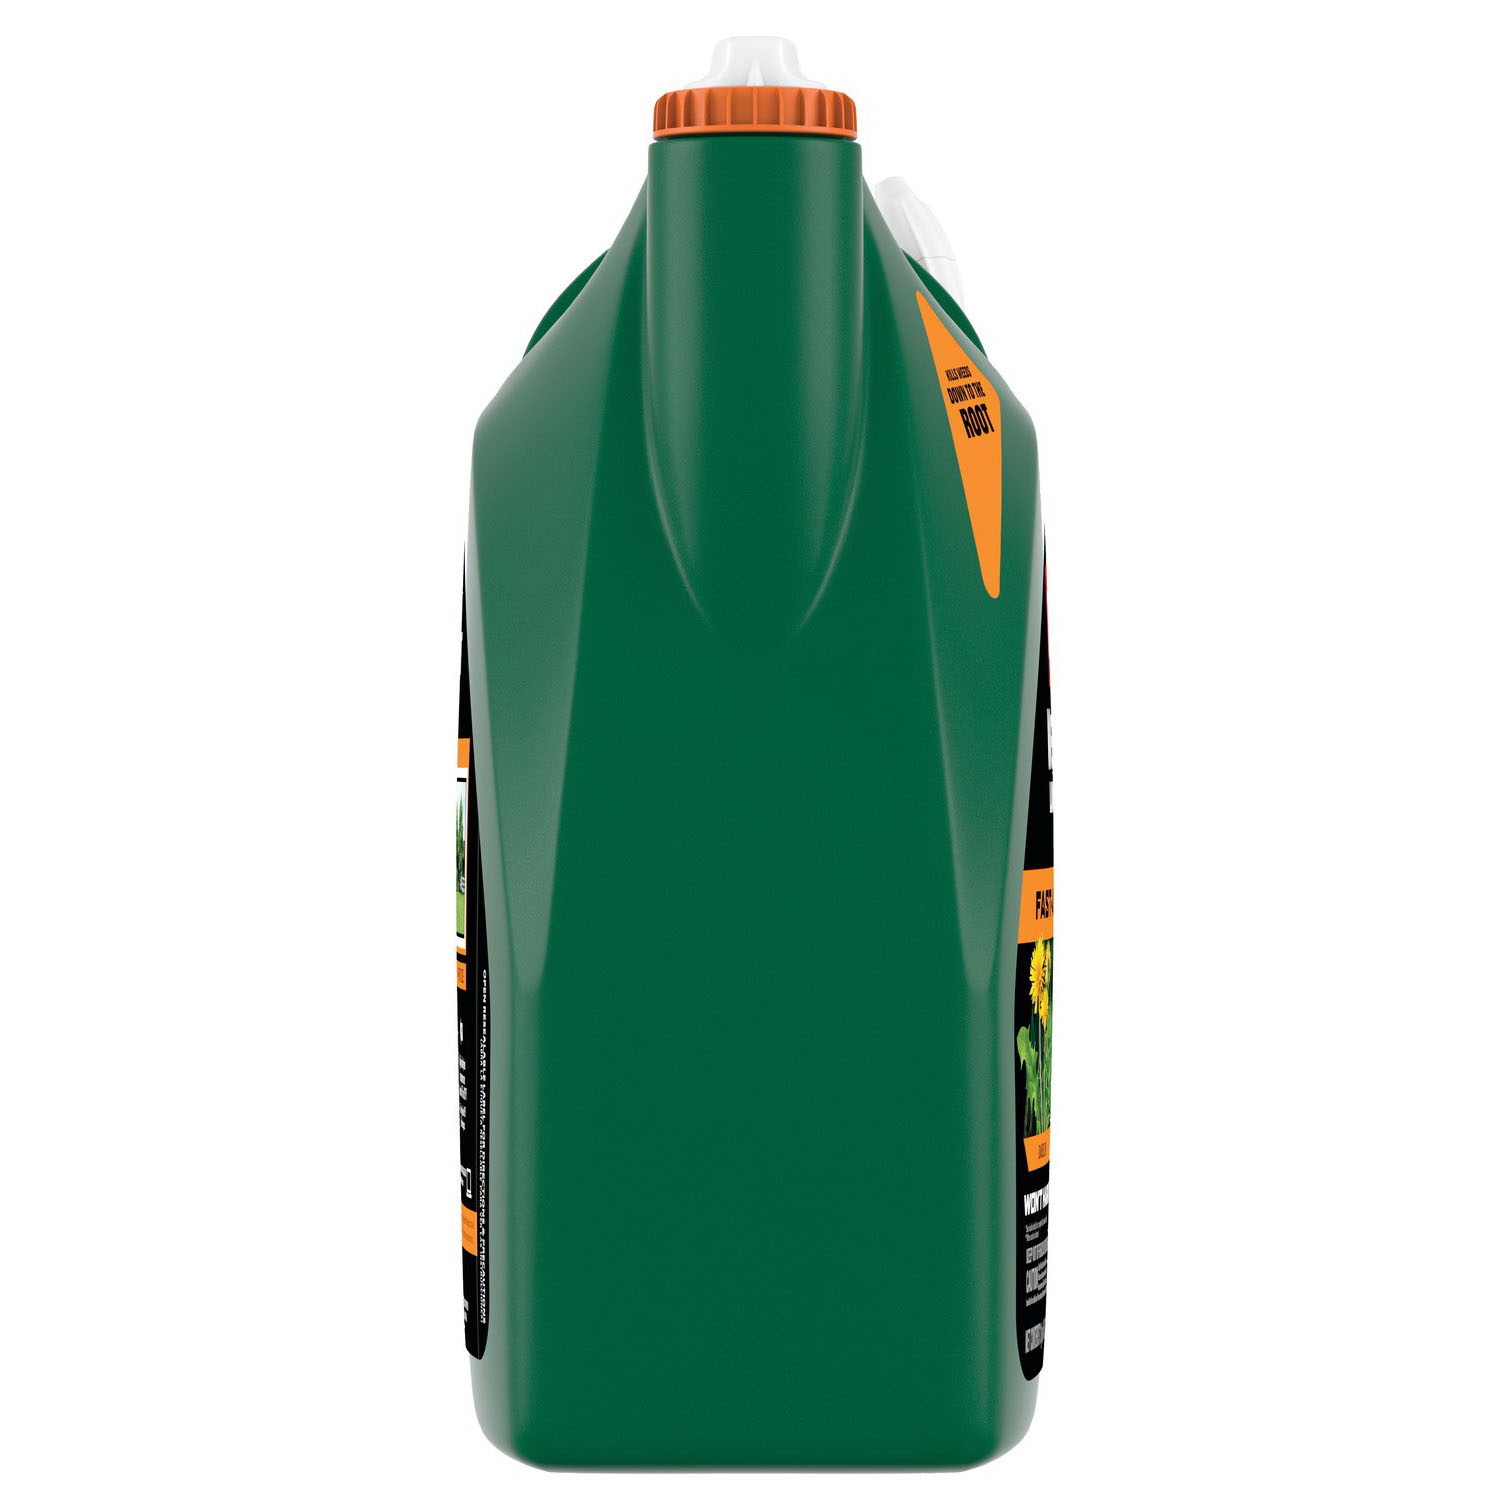 Ortho WeedClear 0446505 Ready-To-Use Lawn Weed Killer, Liquid, Spray Application, 1.1 gal Jug - 3